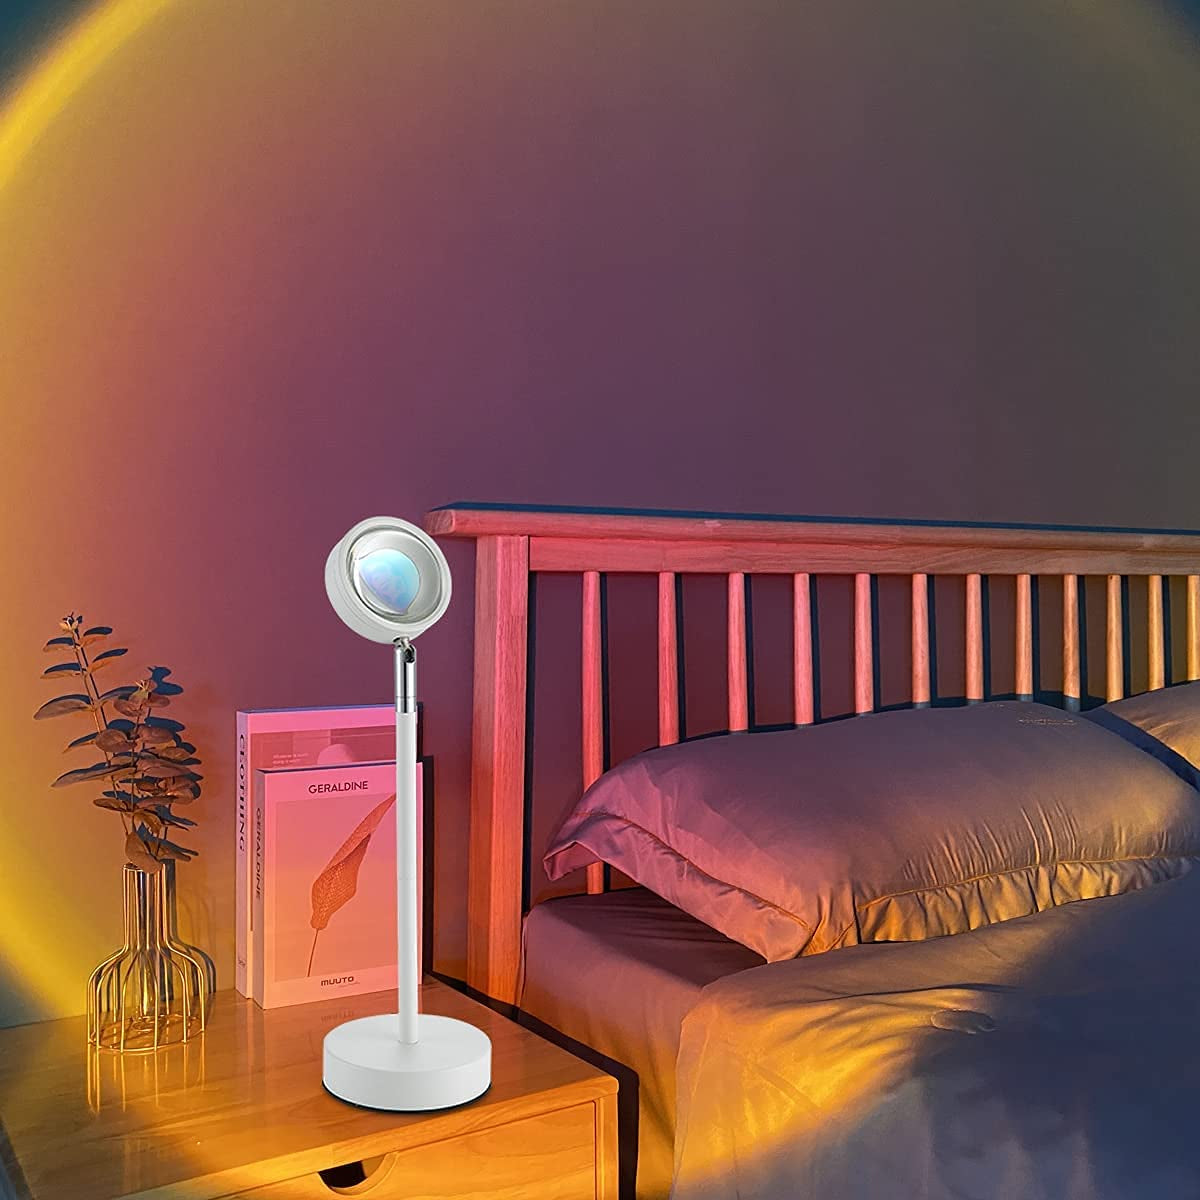 Sunset Projection Lamp, Romantic Led Night Light Projector, 180 Degree Rotation USB Sunset Lamp Projector